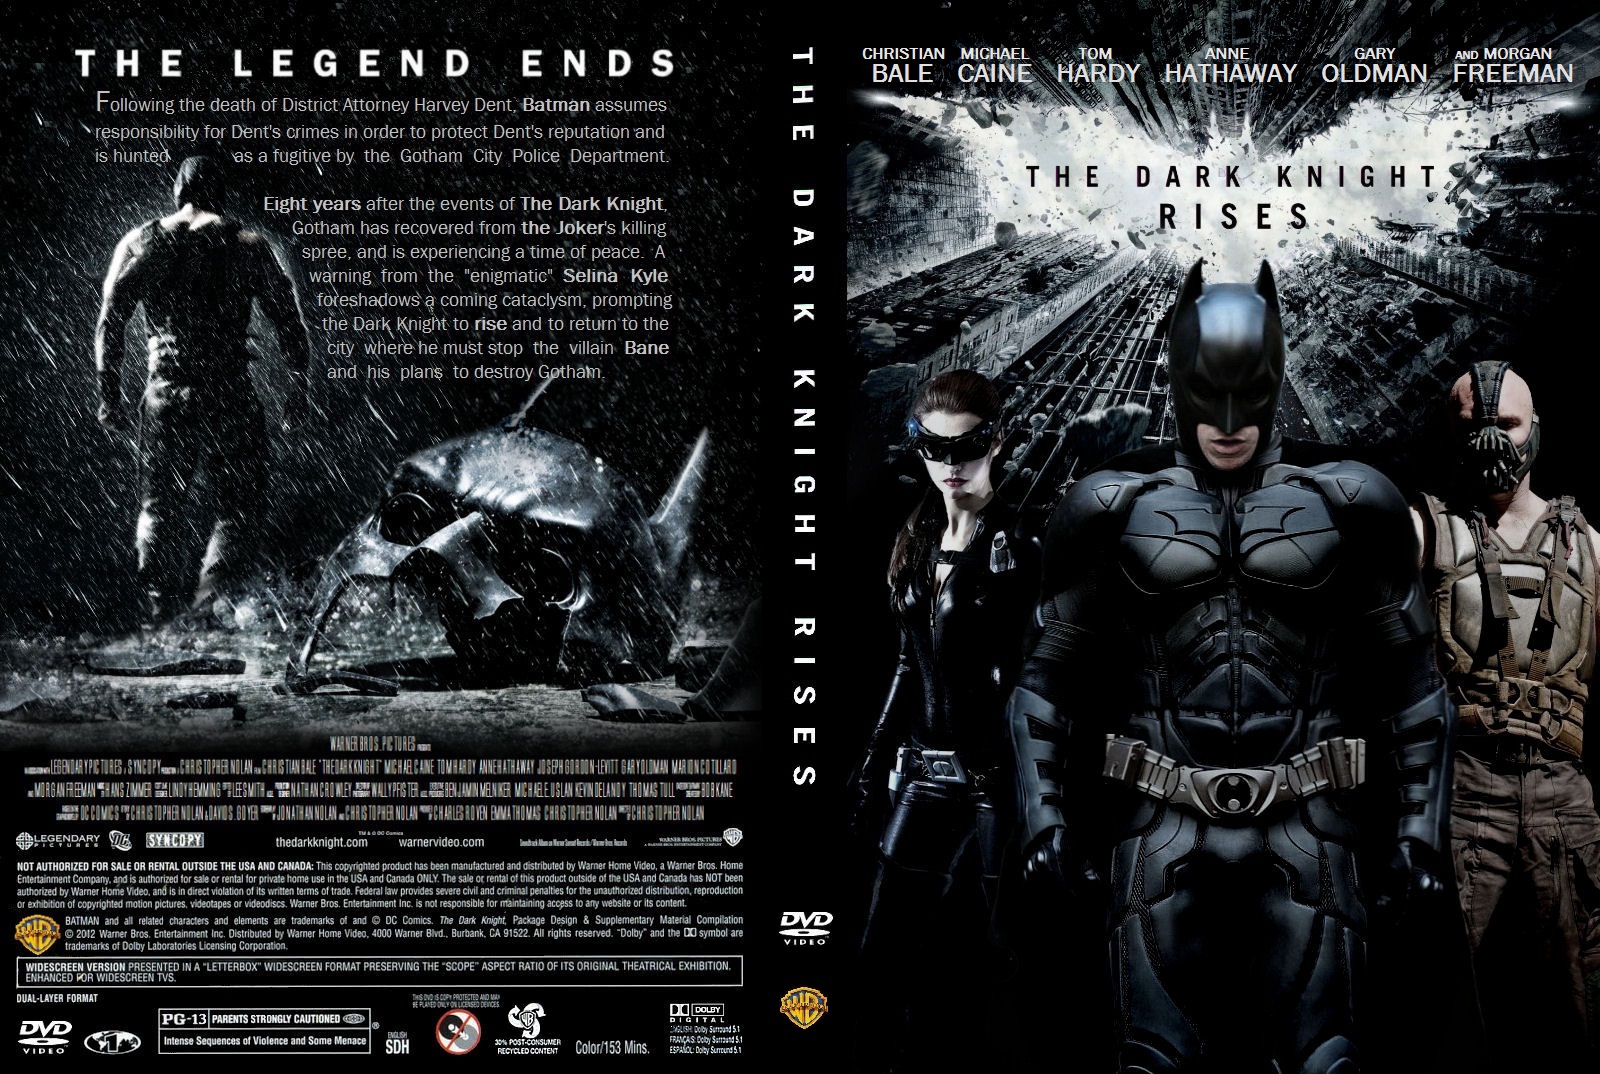 The Dark Knight Rises DVD Cover